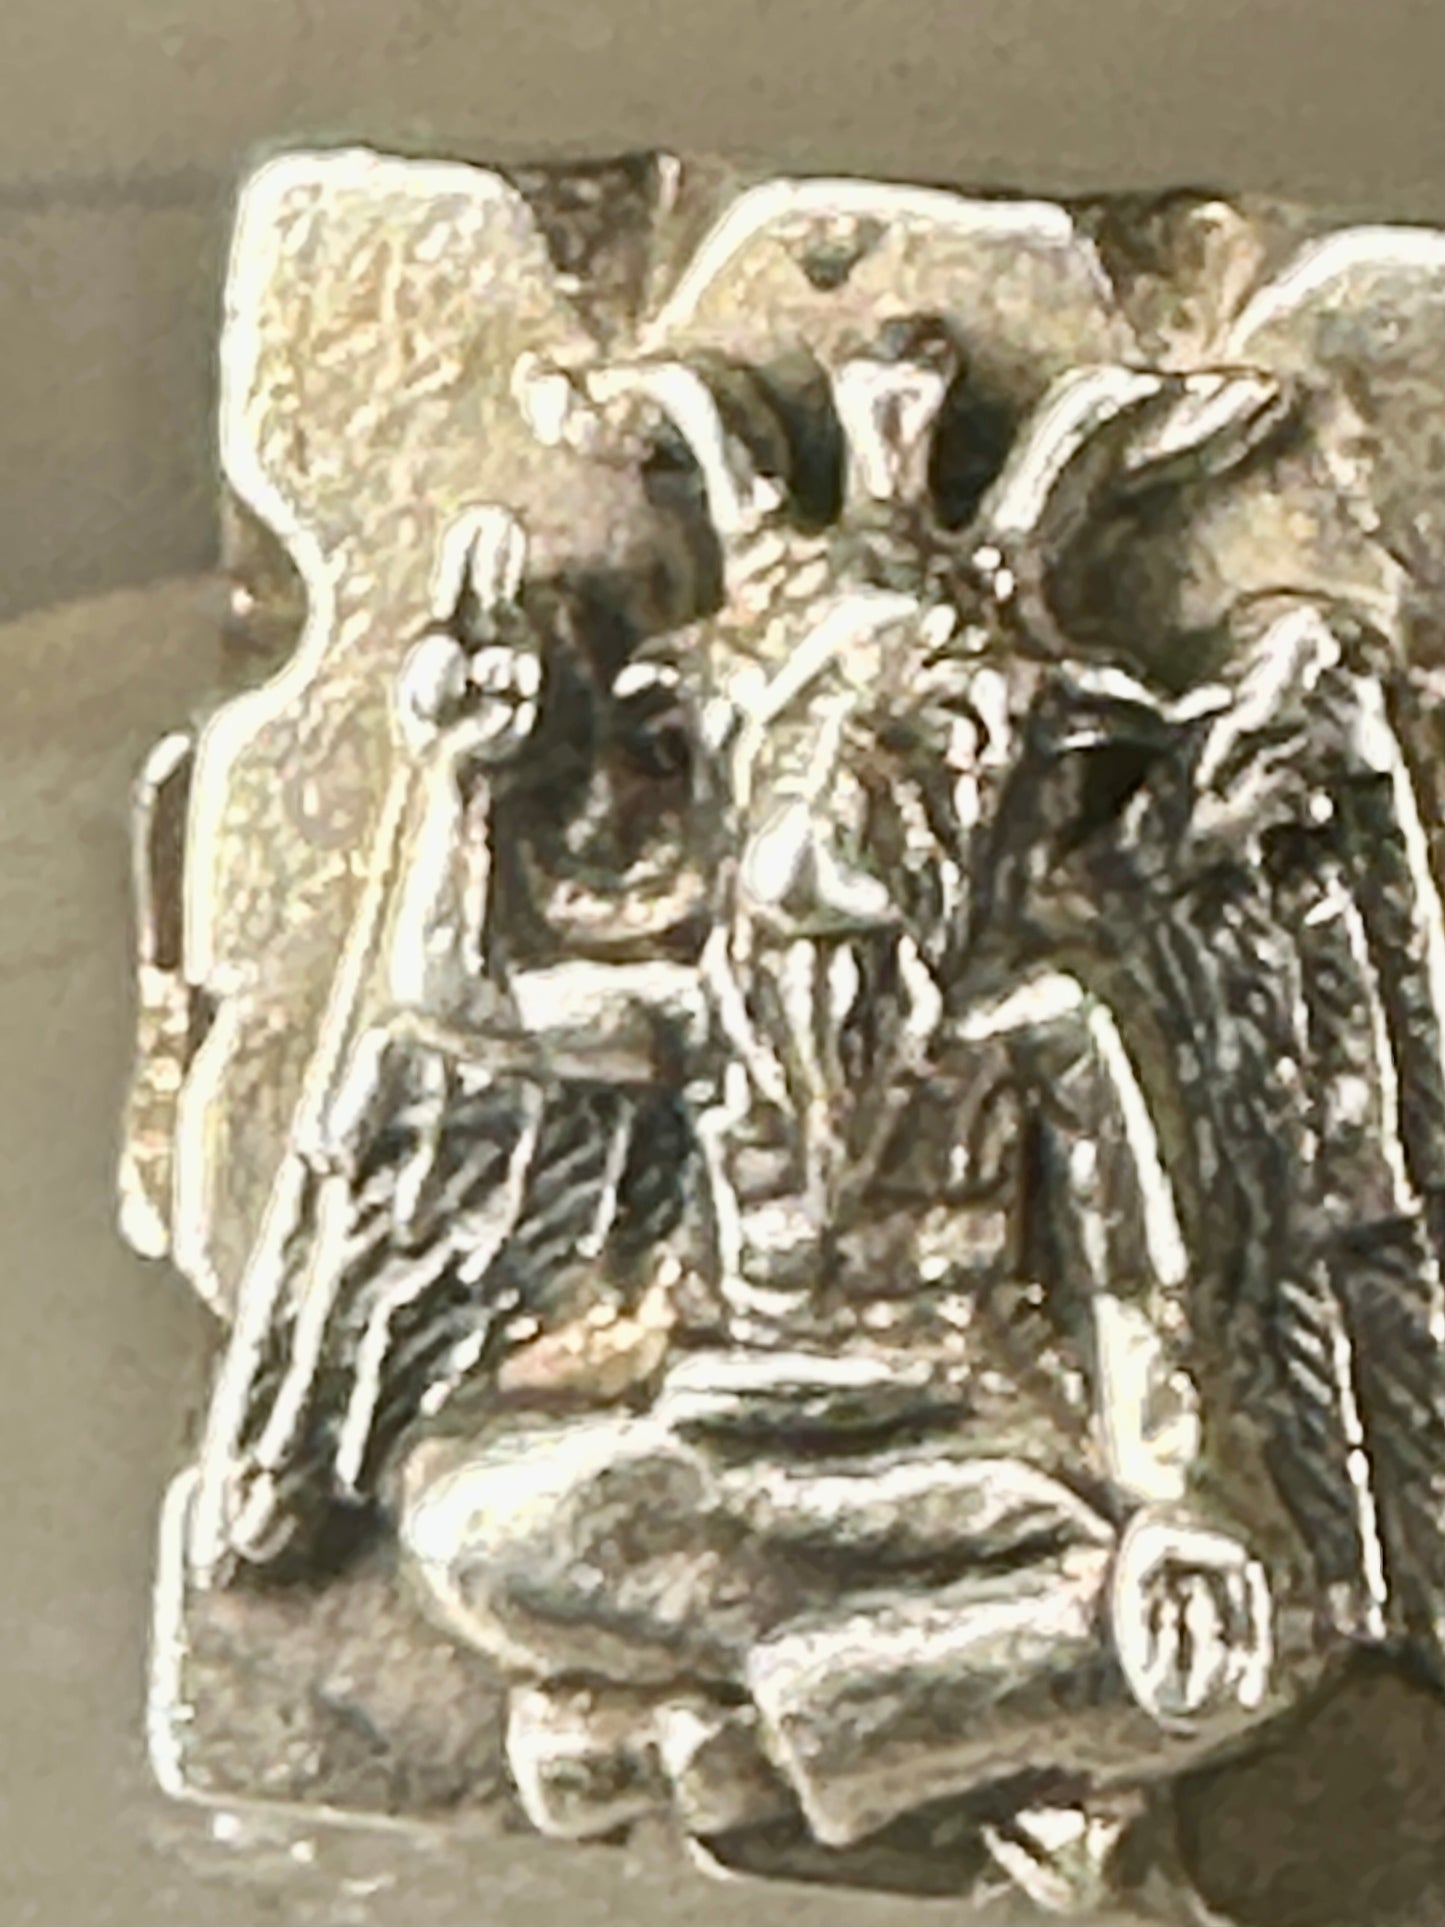 Baphomet ring size 5 goat occult magic goth pentagram sterling silver women